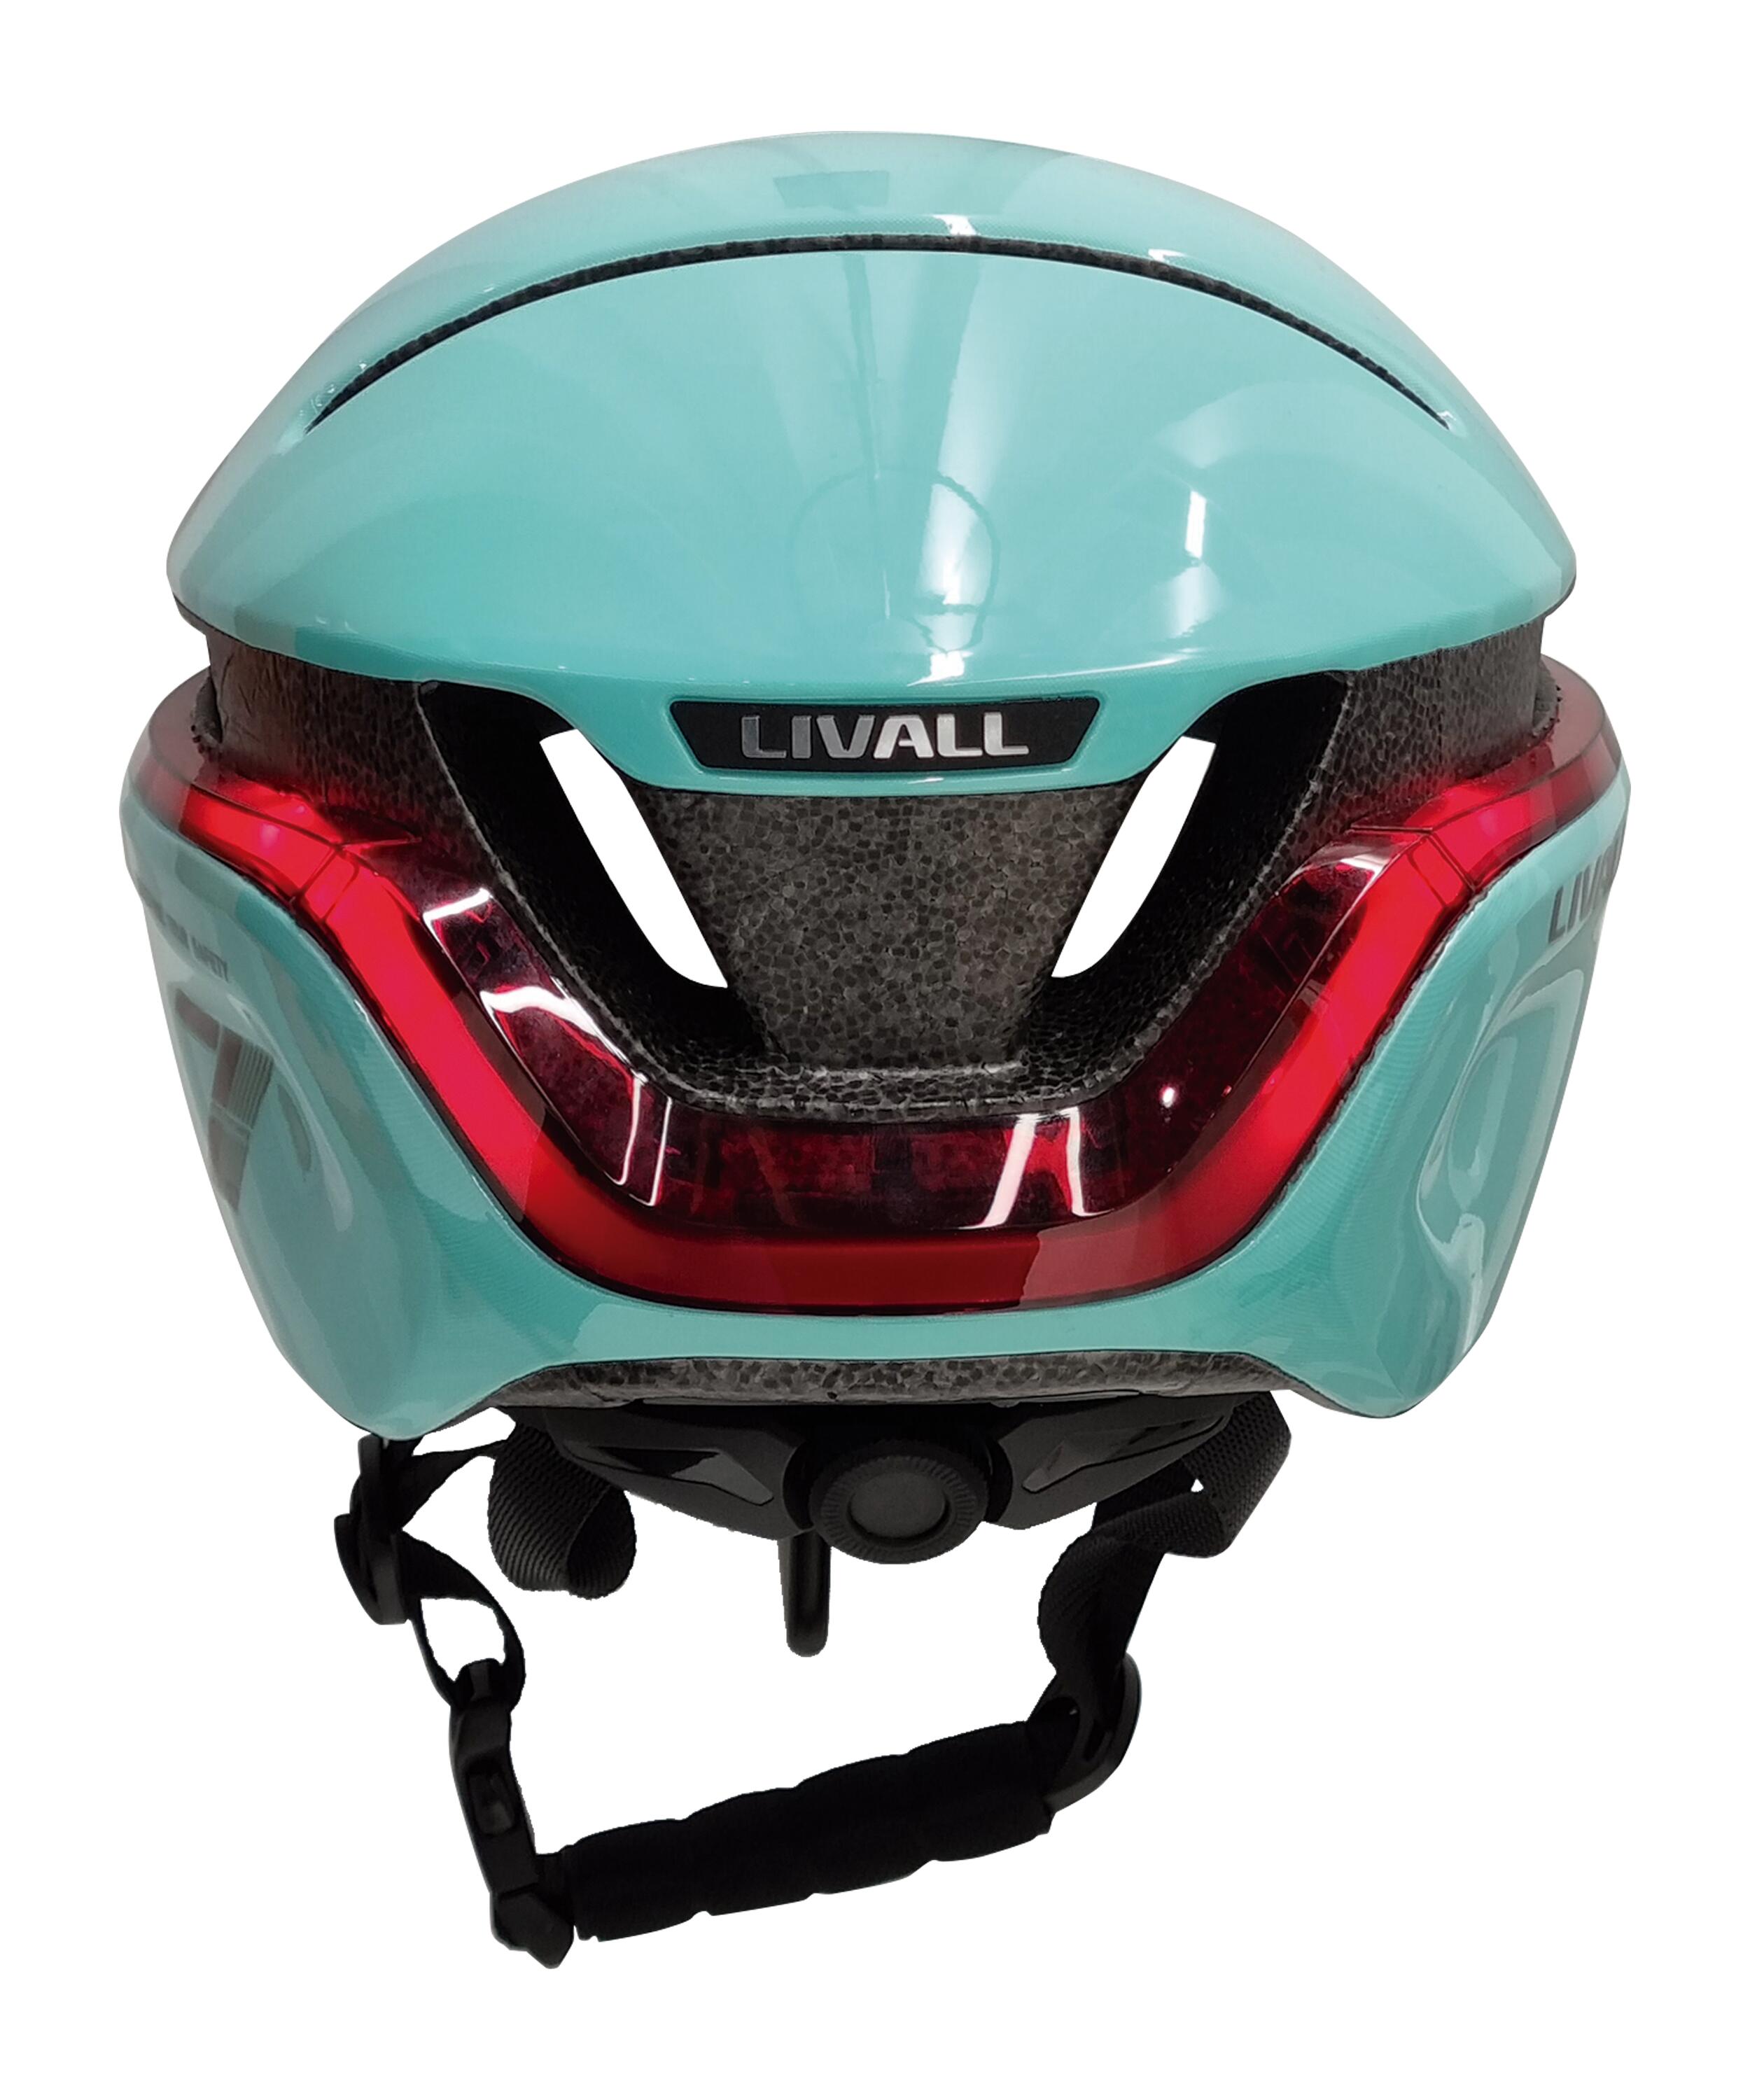 Livall EVO21 Smart Riding Helmet 2/7